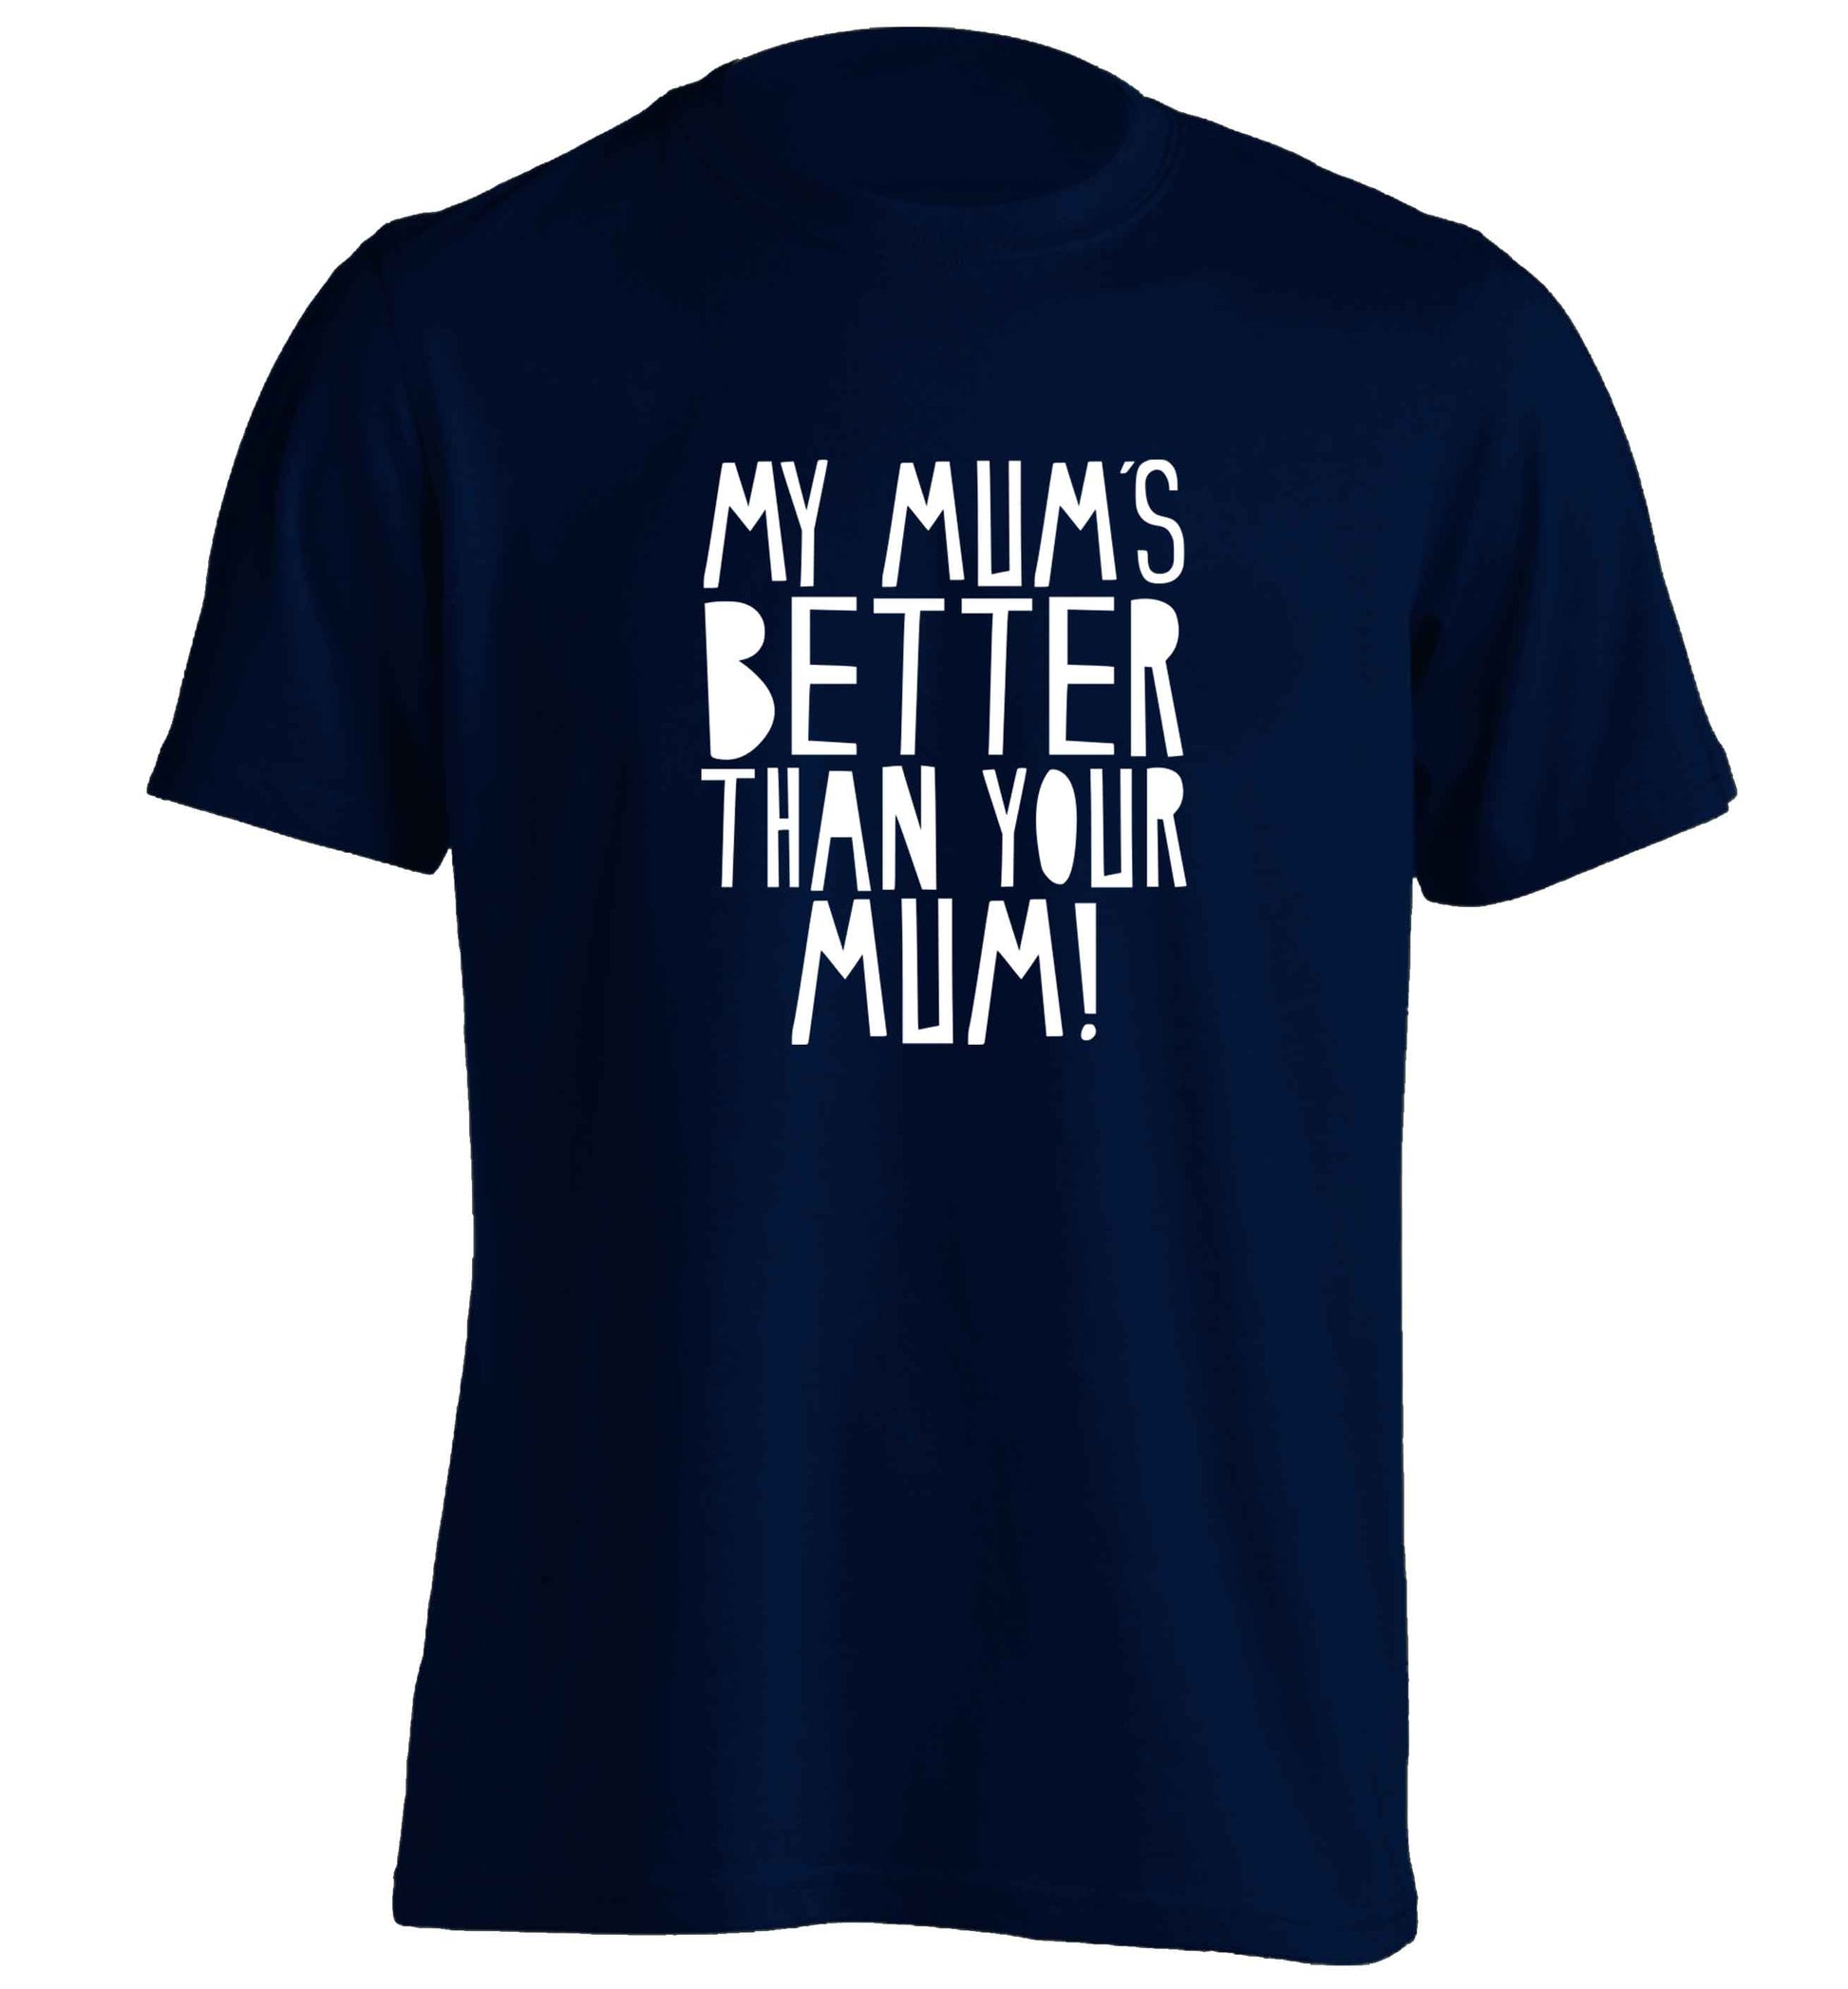 My mum's better than your mum adults unisex navy Tshirt 2XL